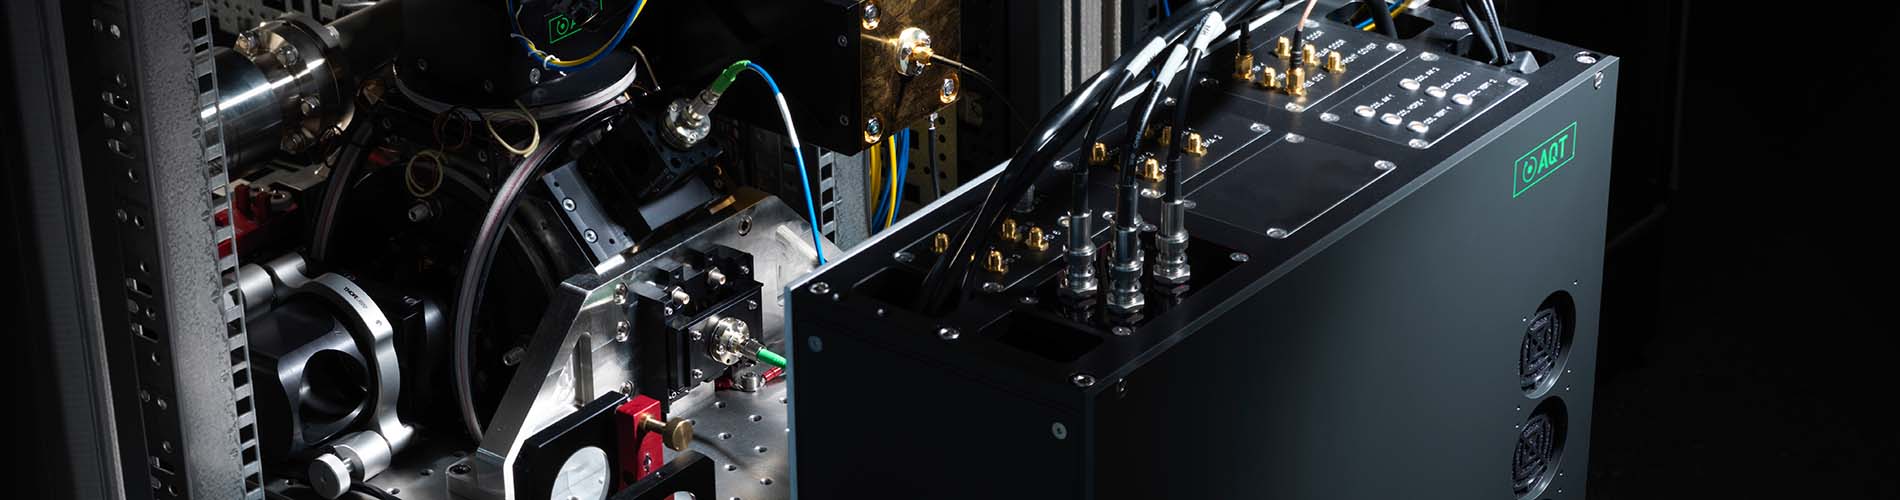 Pine System - 19''rack inside AQT Alpine Quantum Technologies